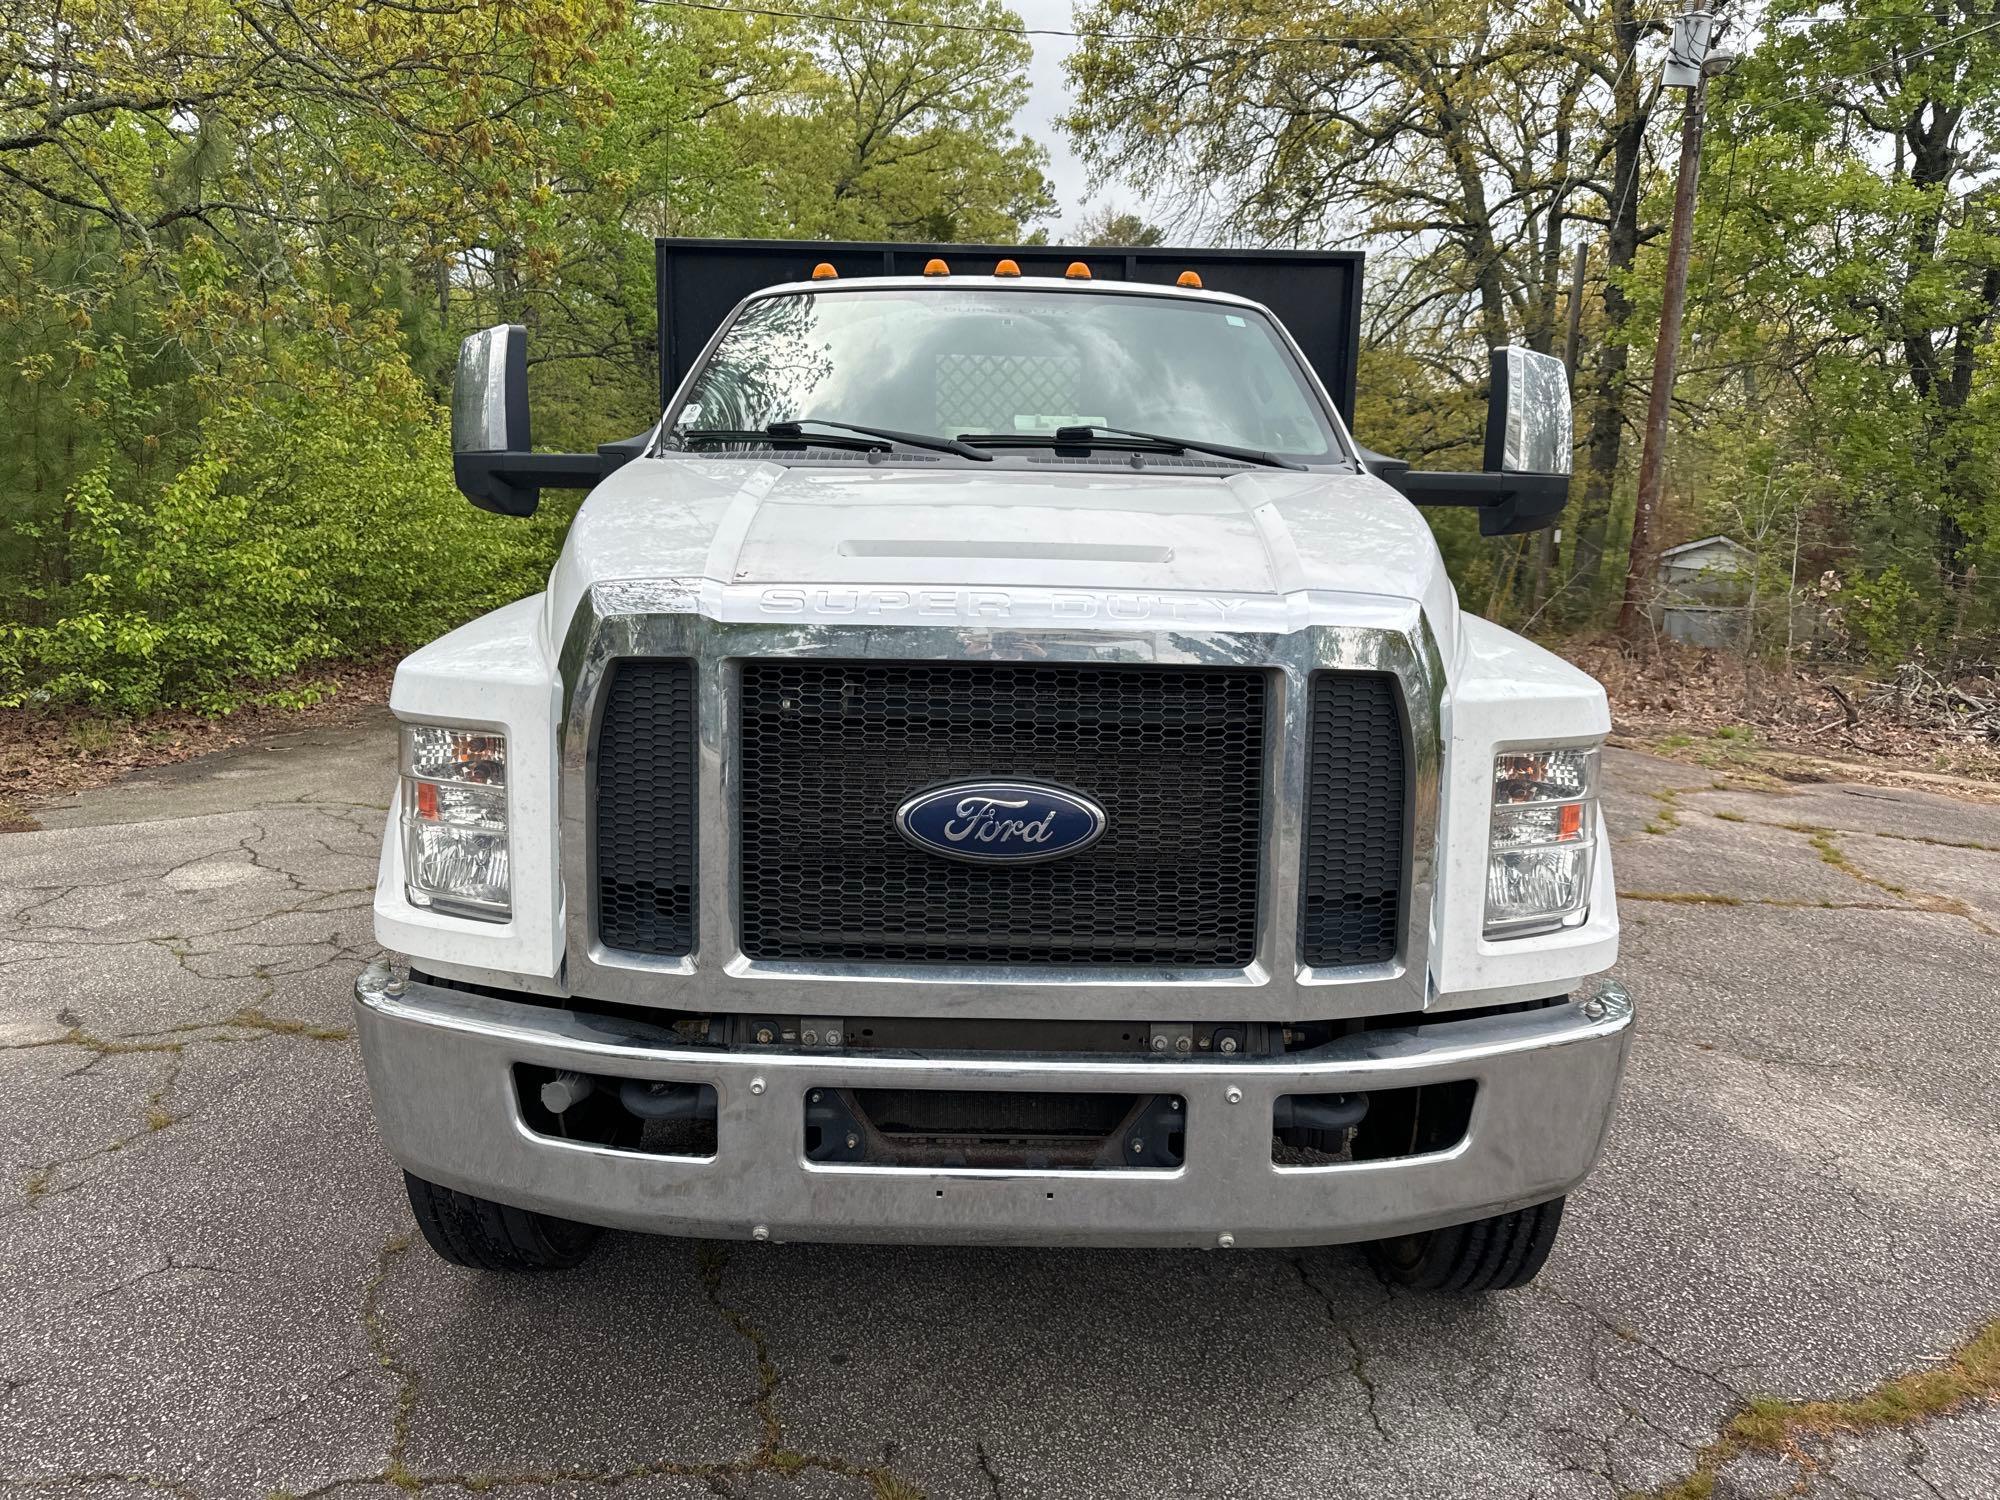 2019 Ford F-750 Truck, VIN # 1FDWF7DC6KDF07420